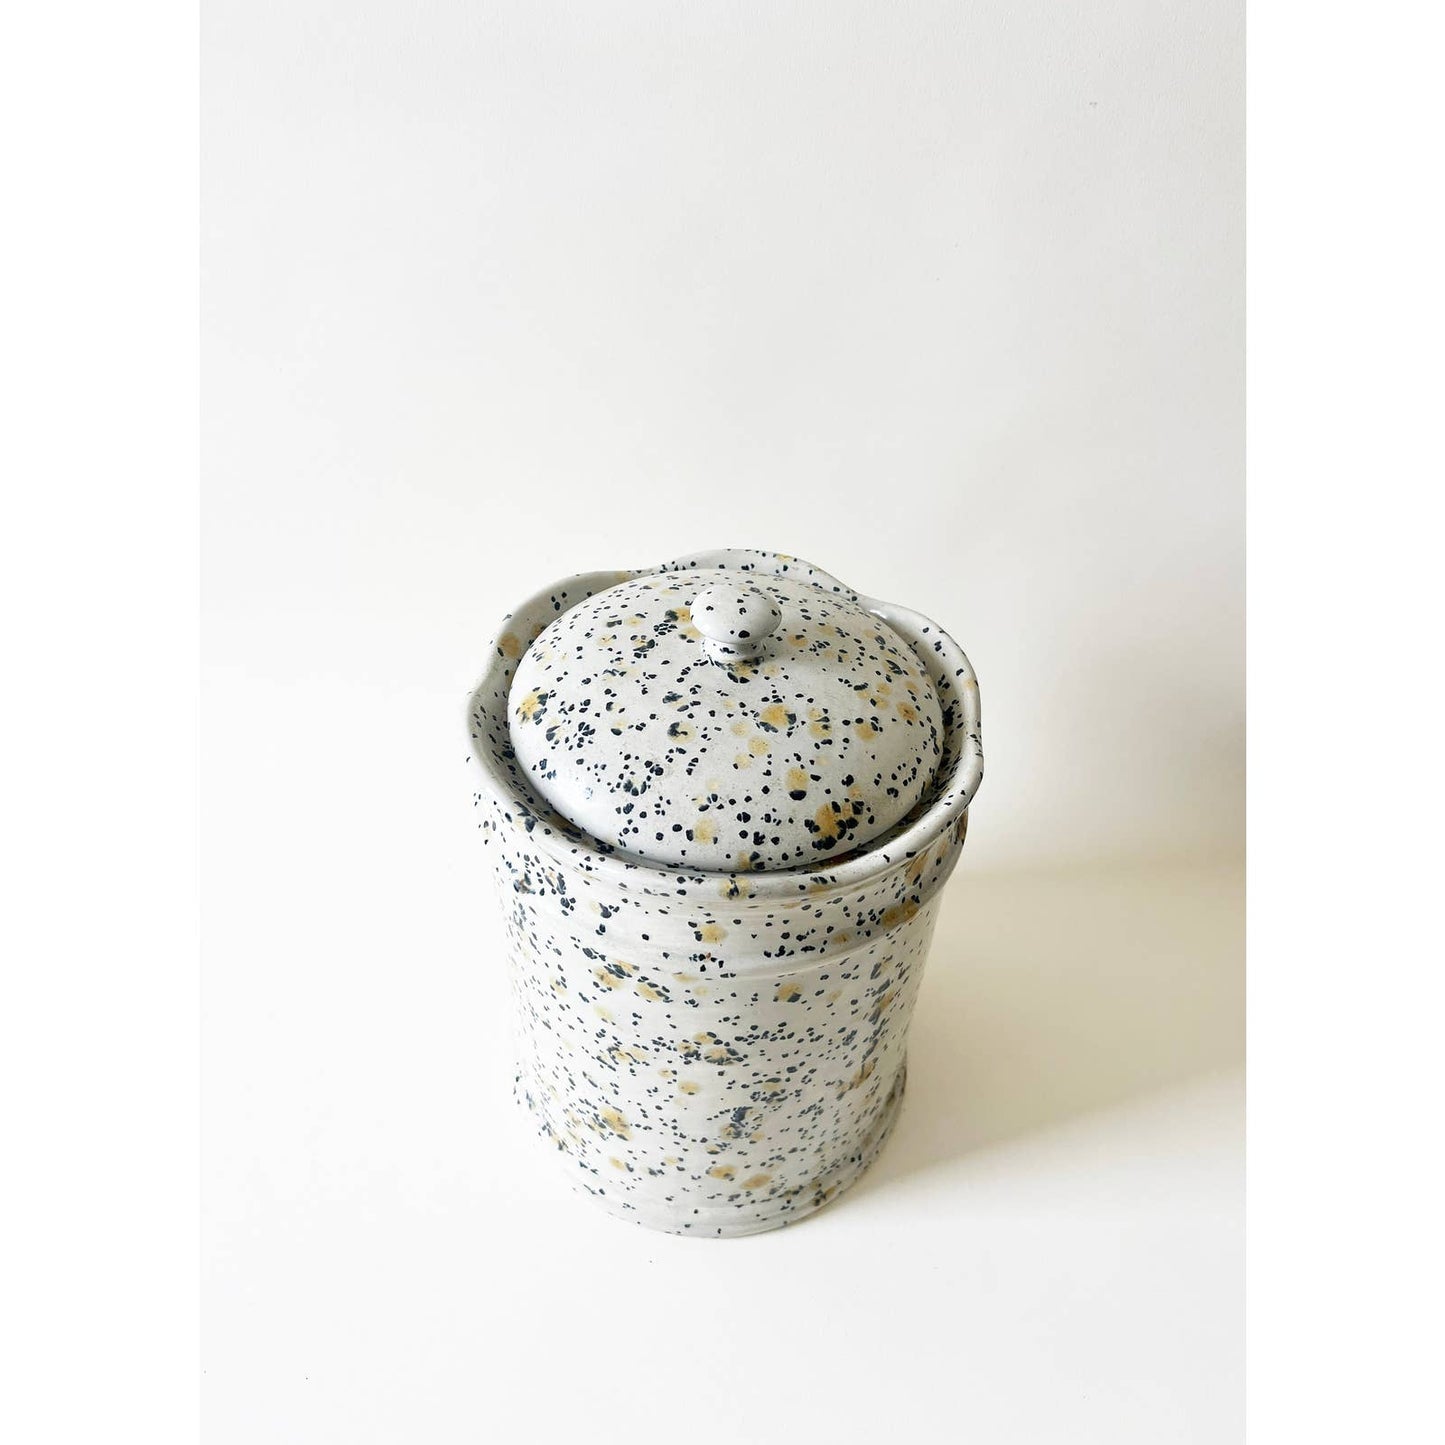 Vintage Black and Yellow Speckled Ceramic Jar, Mid Century Cookie Jar with Lid